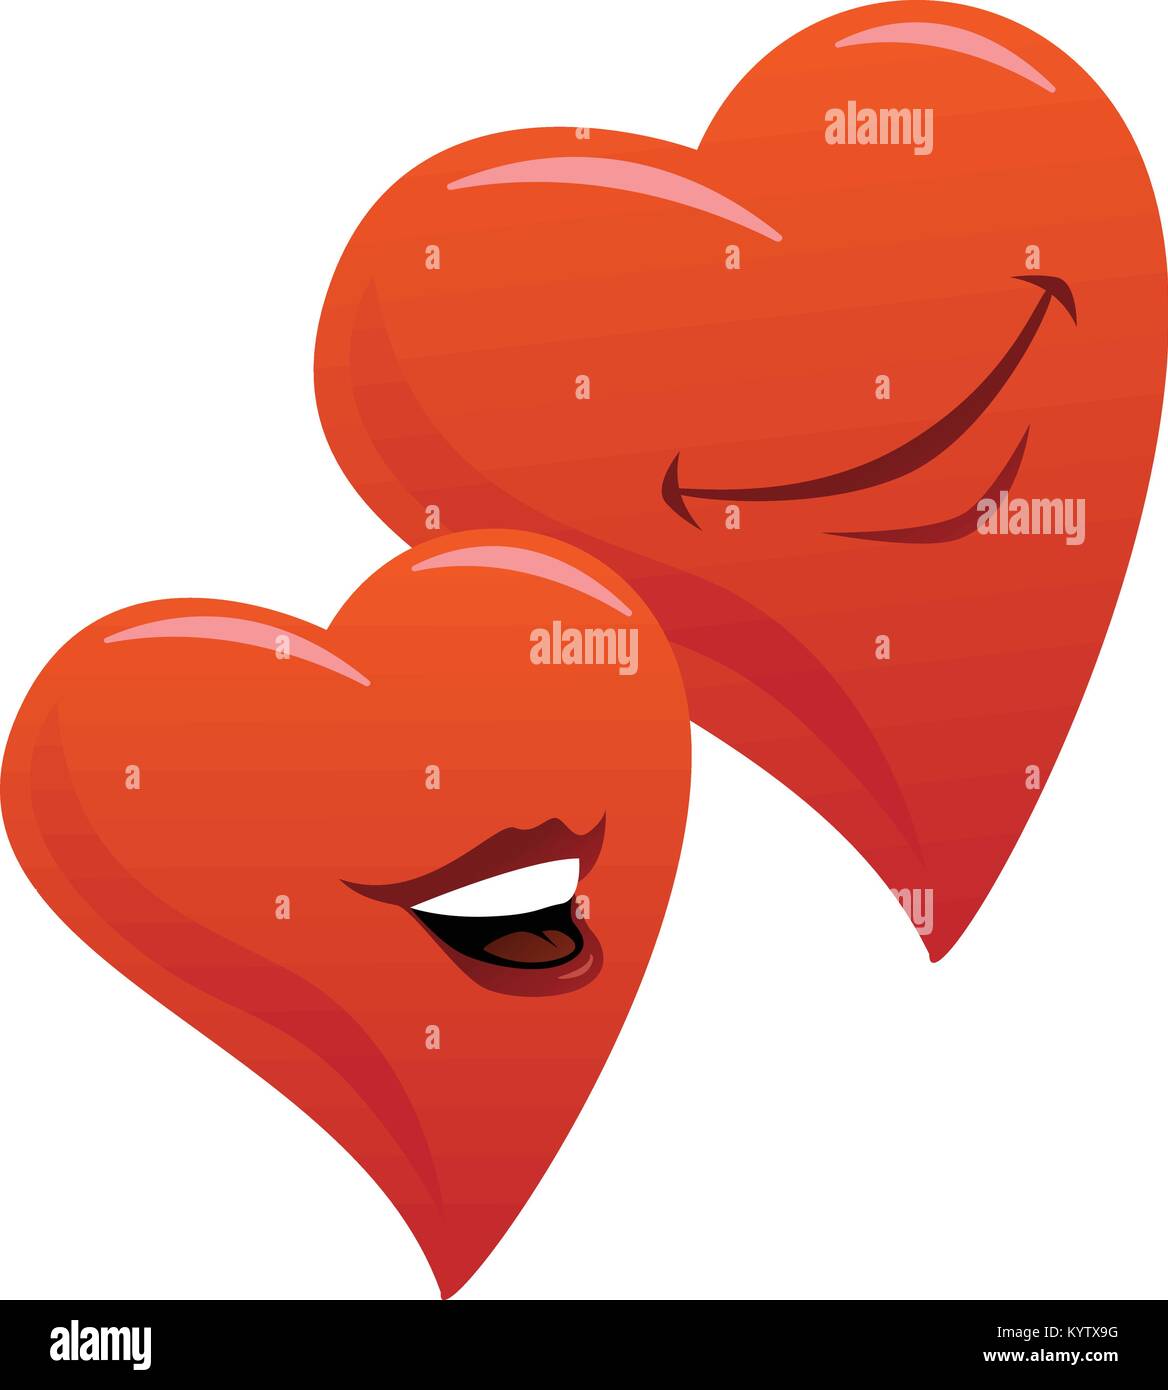 Süß lächelnd romantische Herzen Paar Cartoon Vector Illustration Stock Vektor